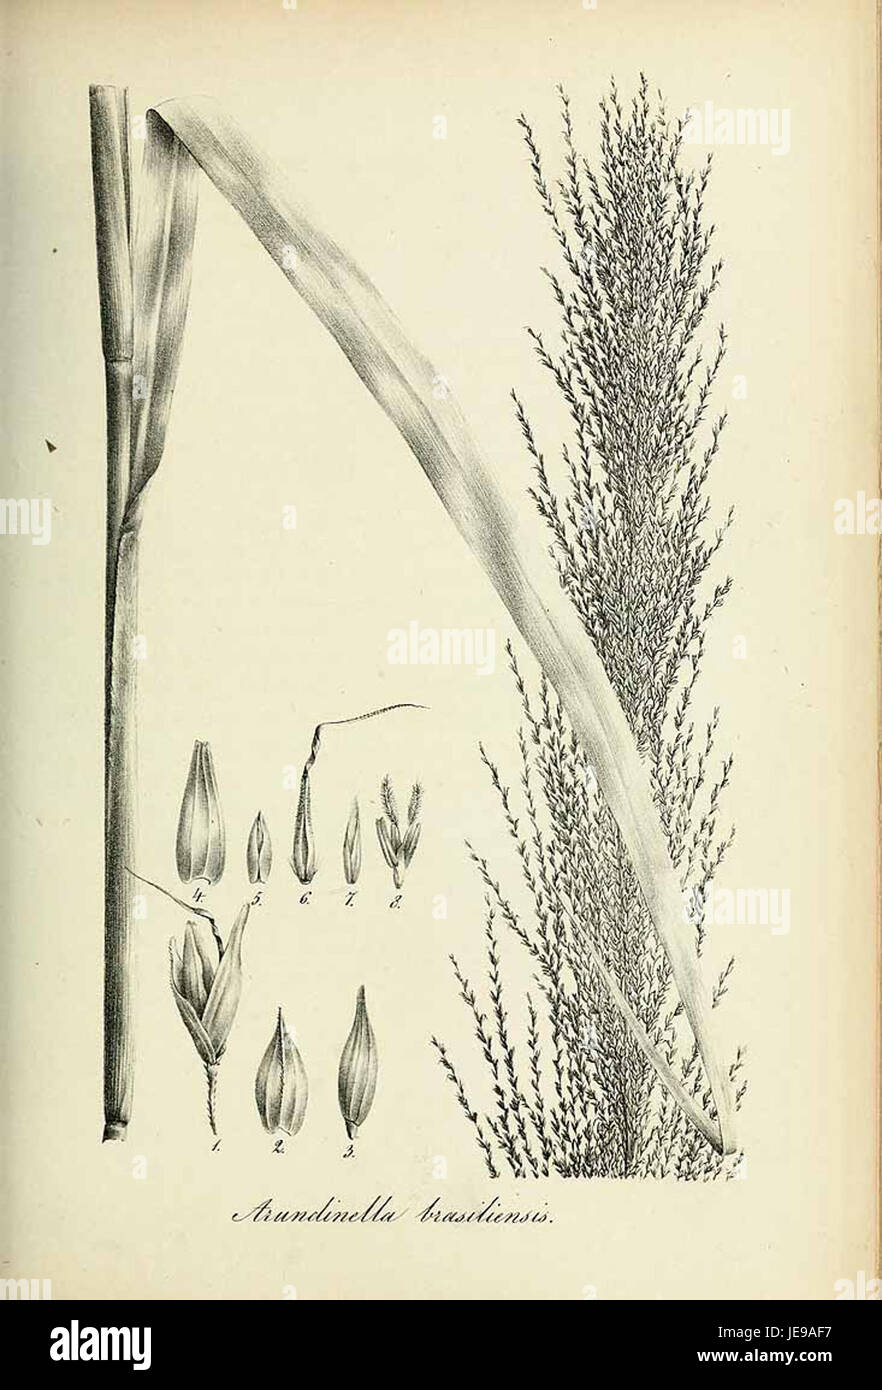 Arundinella brasiliensis - Species graminum - Volume 3 Stock Photo